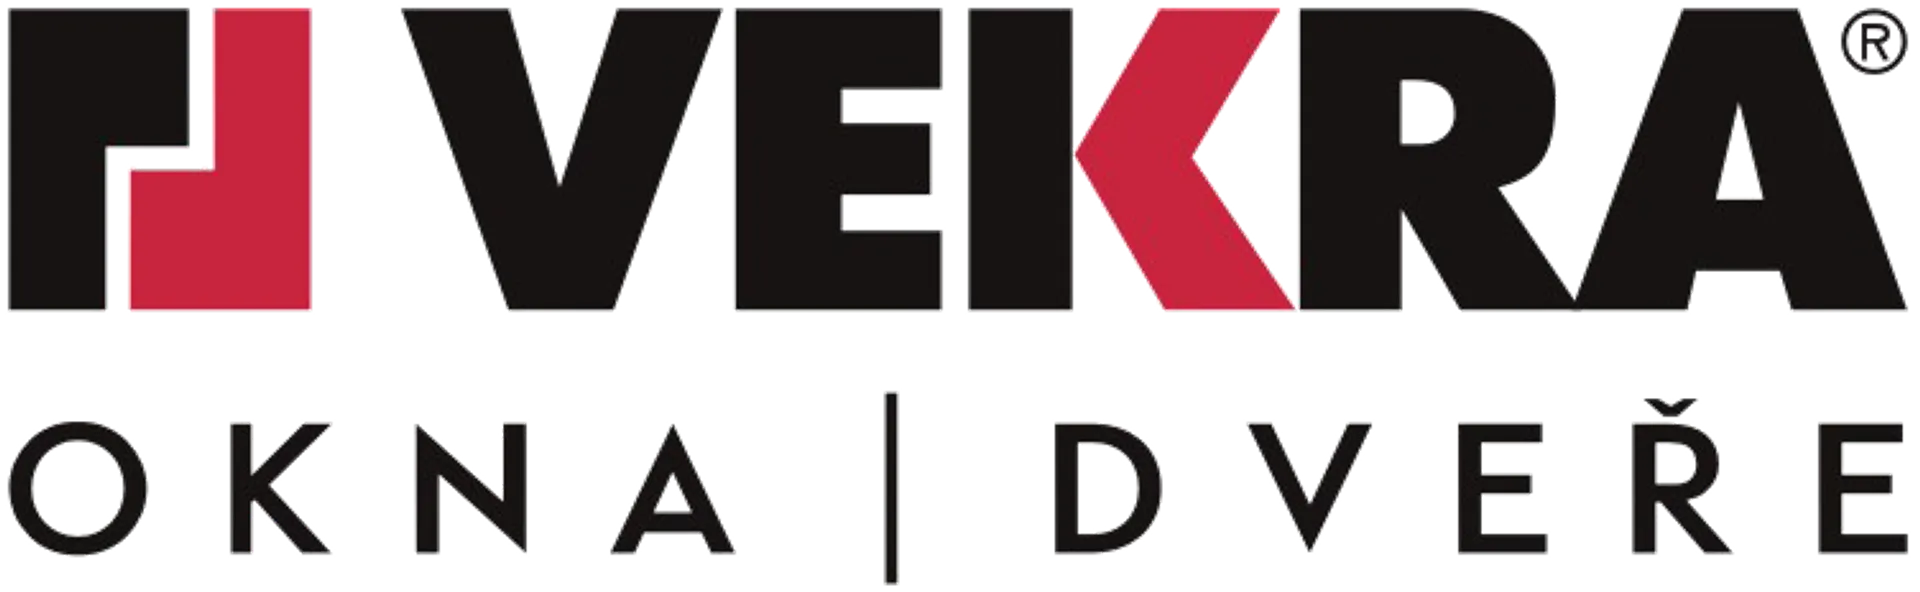 VEKRA logo of current flyer